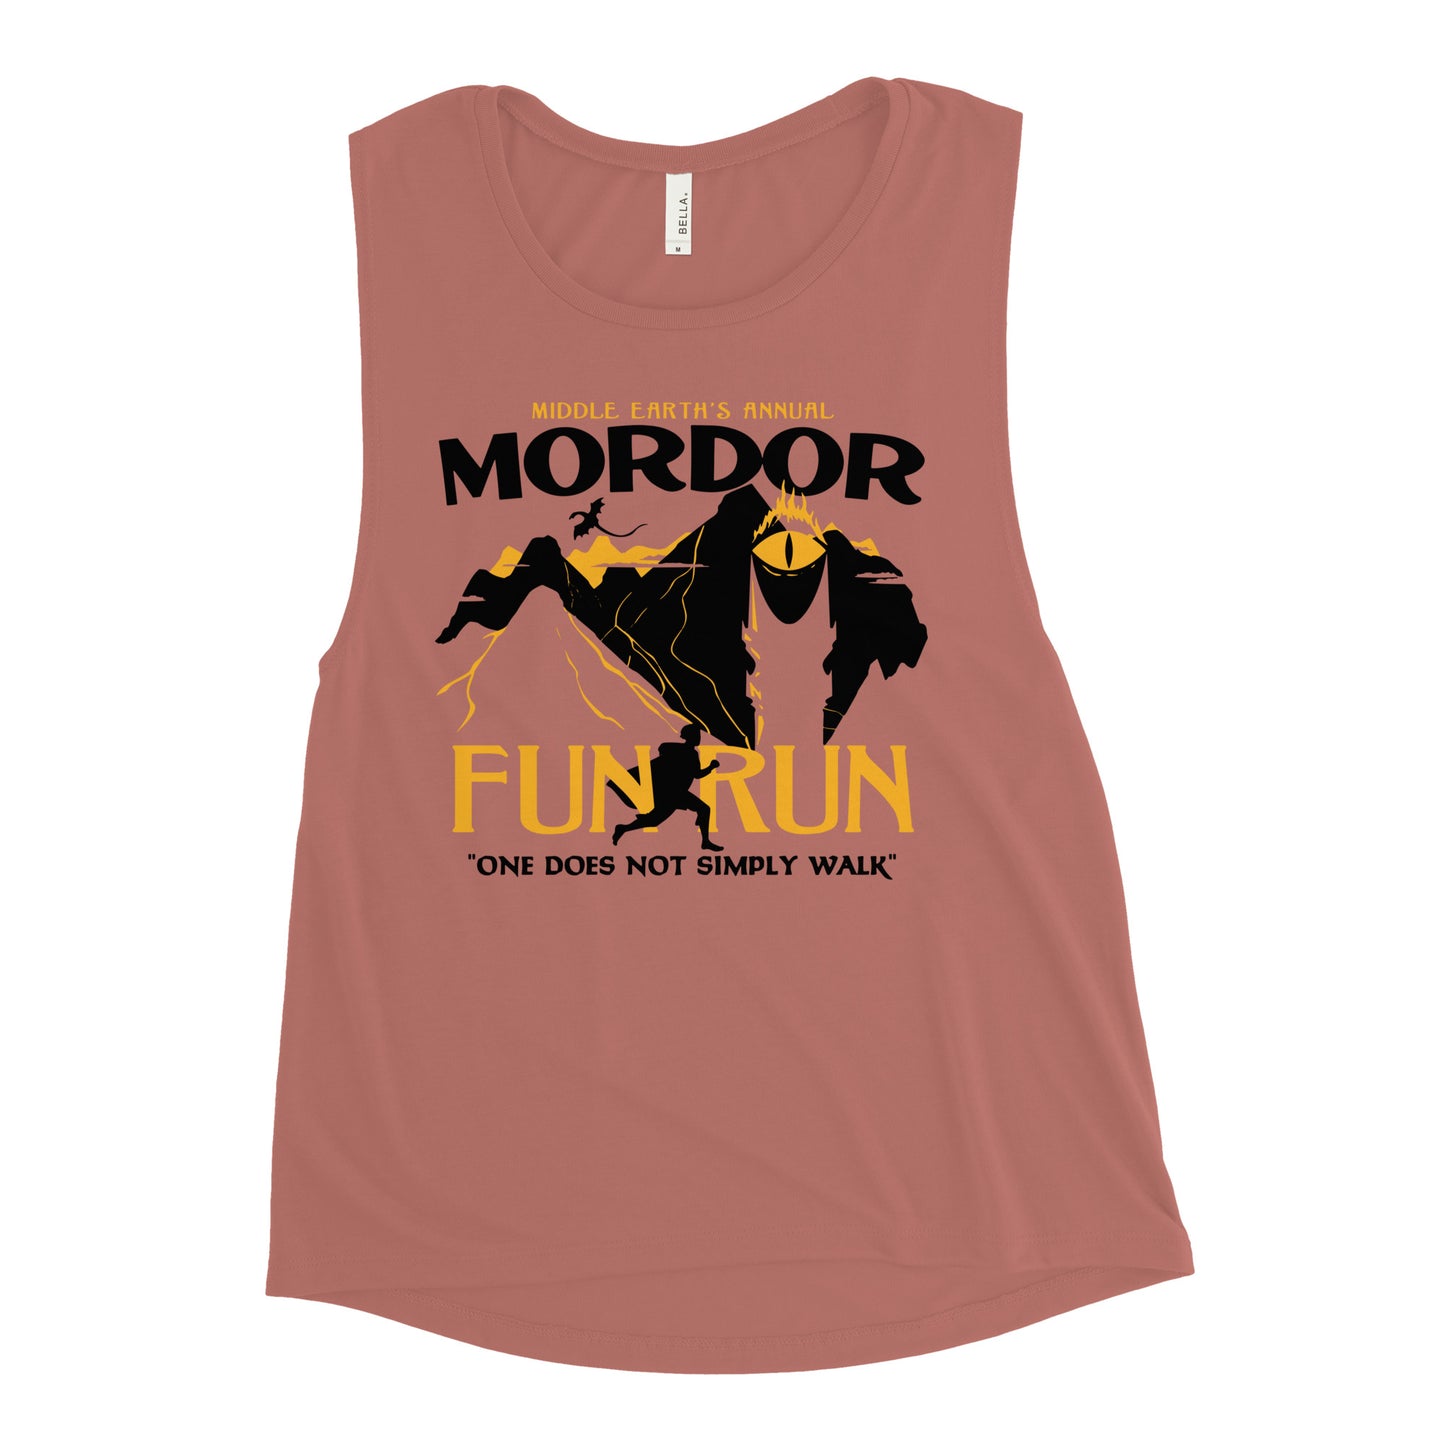 Mordor Fun Run Women's Muscle Tank